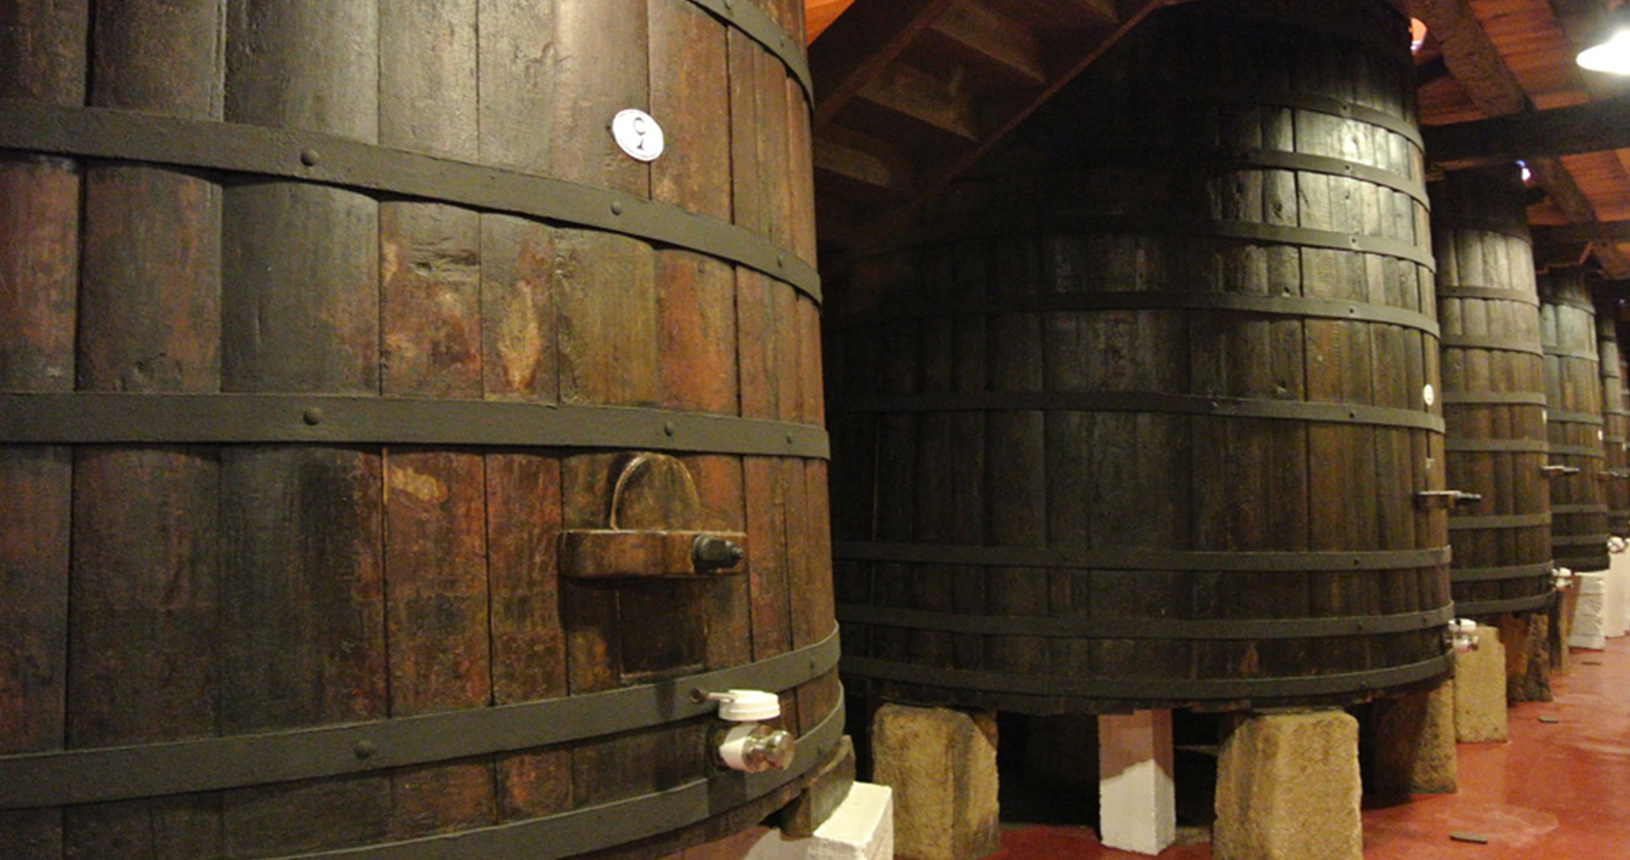 19th century wooden fermenters